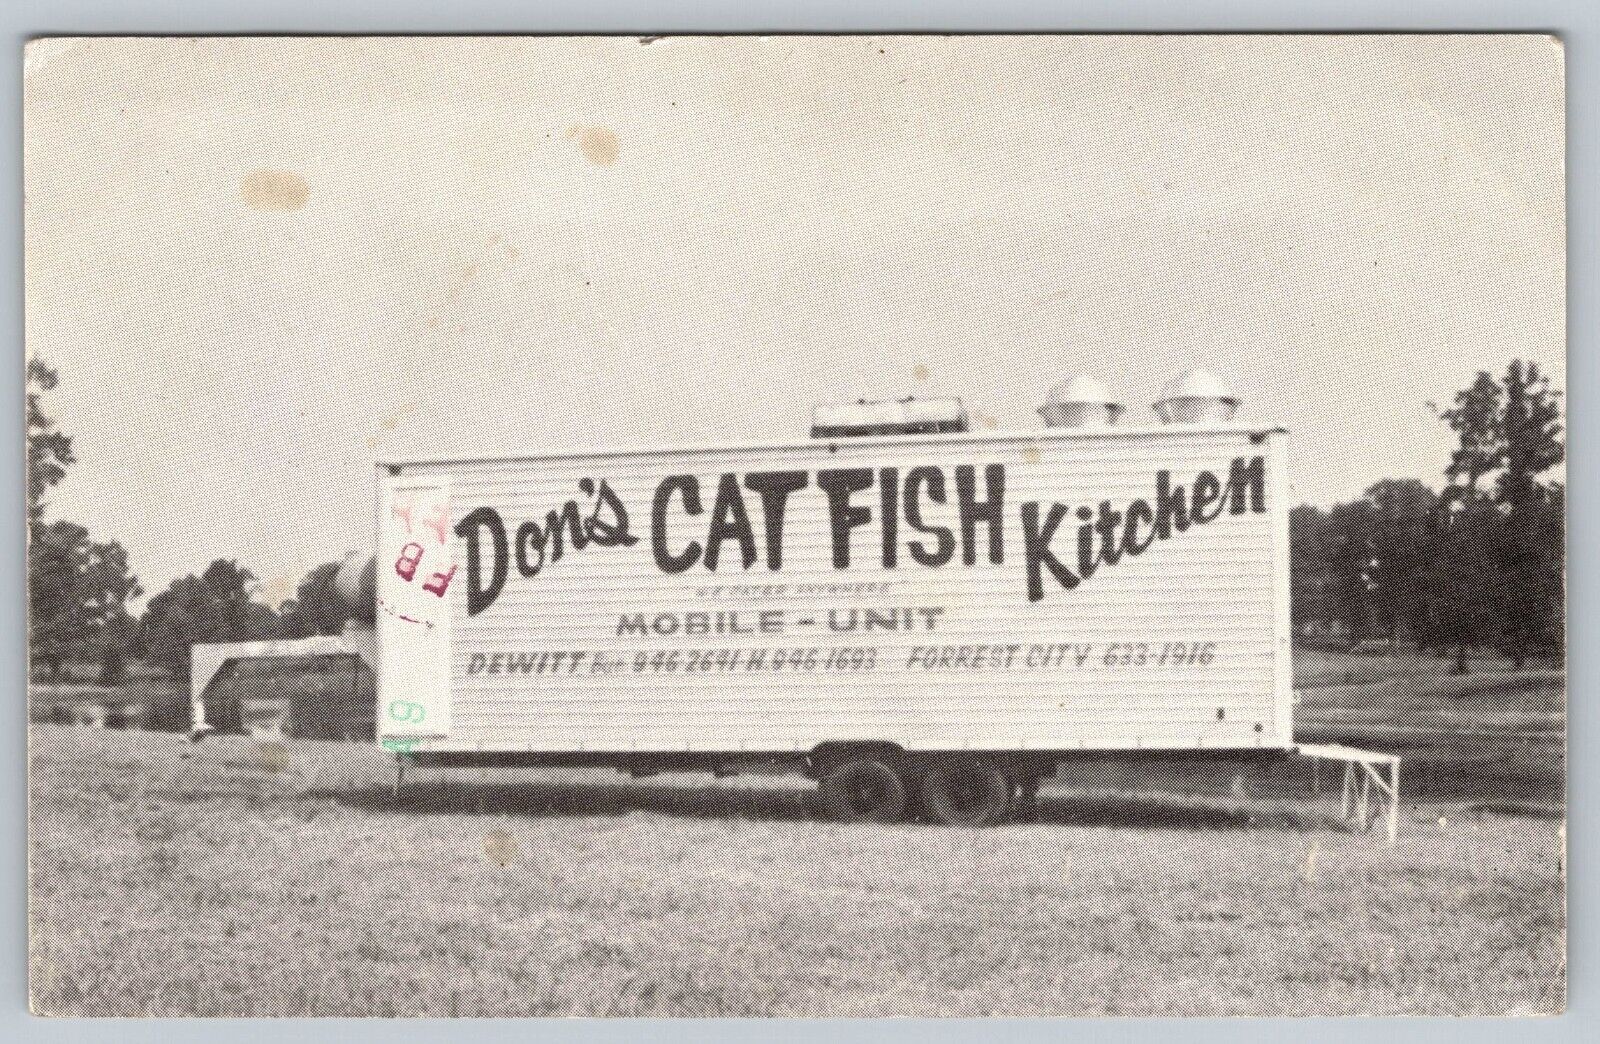 RPPC Dons Catfish Kitchen Mobile Dewitt Forrest City Arkansas 1979 Postcard - M4